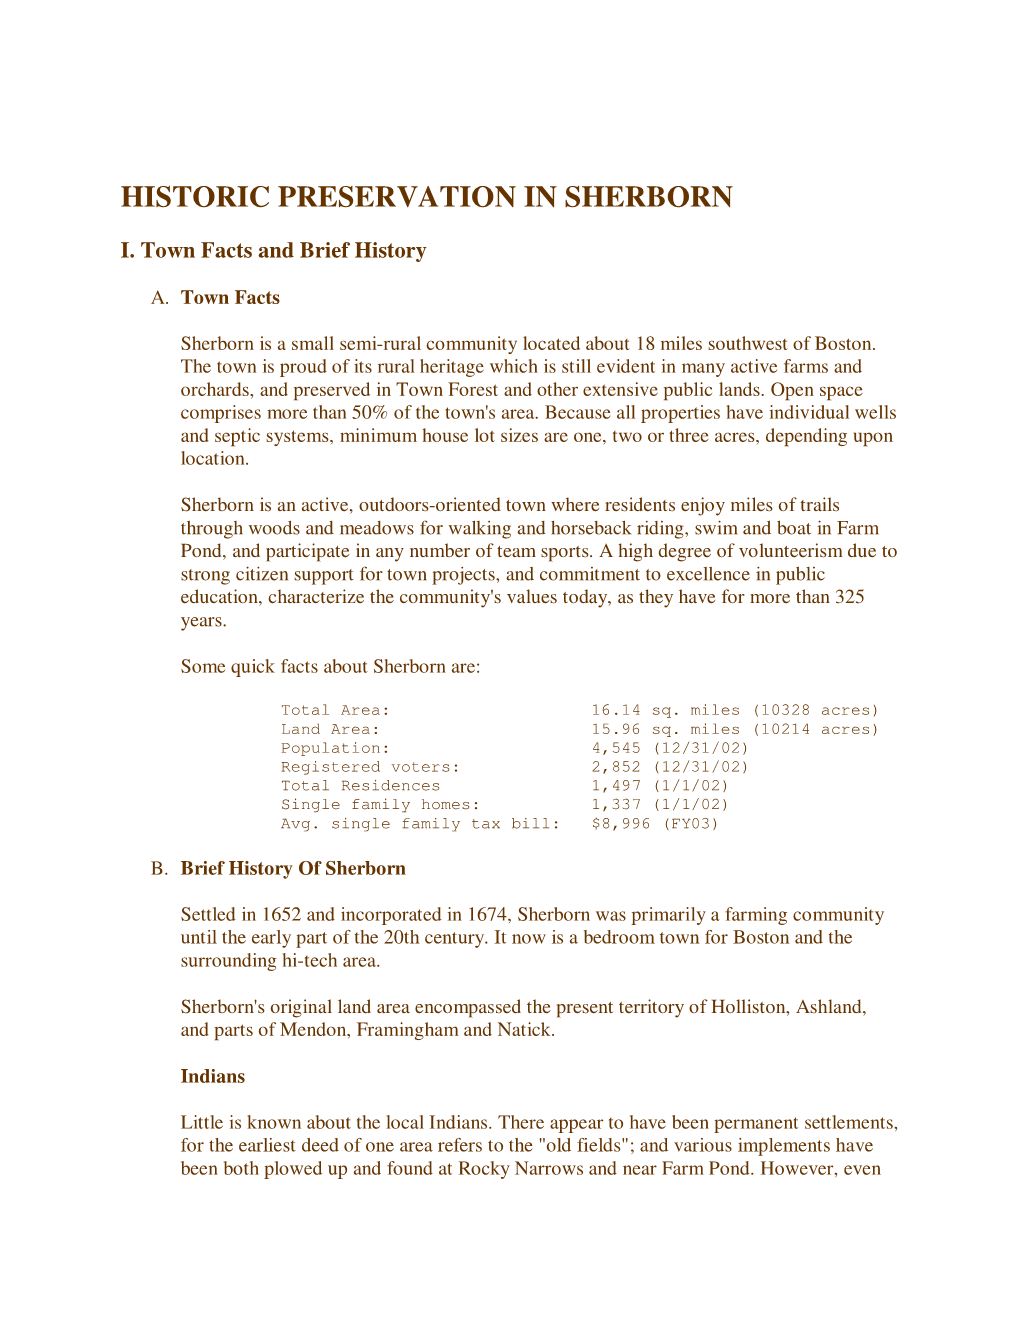 Historic Preservation in Sherborn